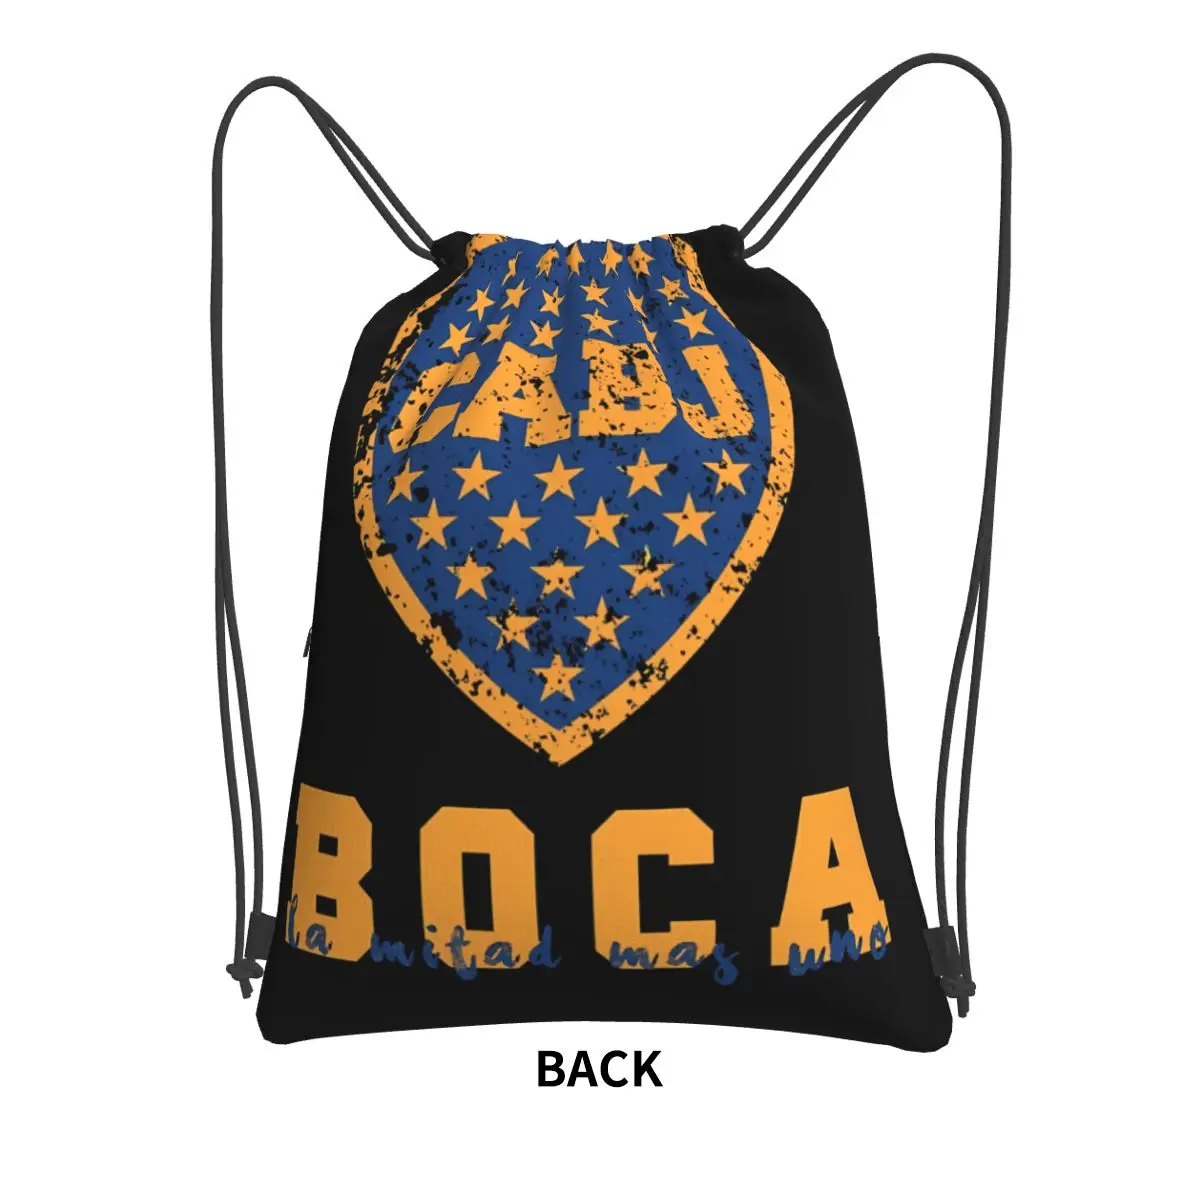 Boca Juniors Argentina Drawstring Bags Backpacks Sports Kids